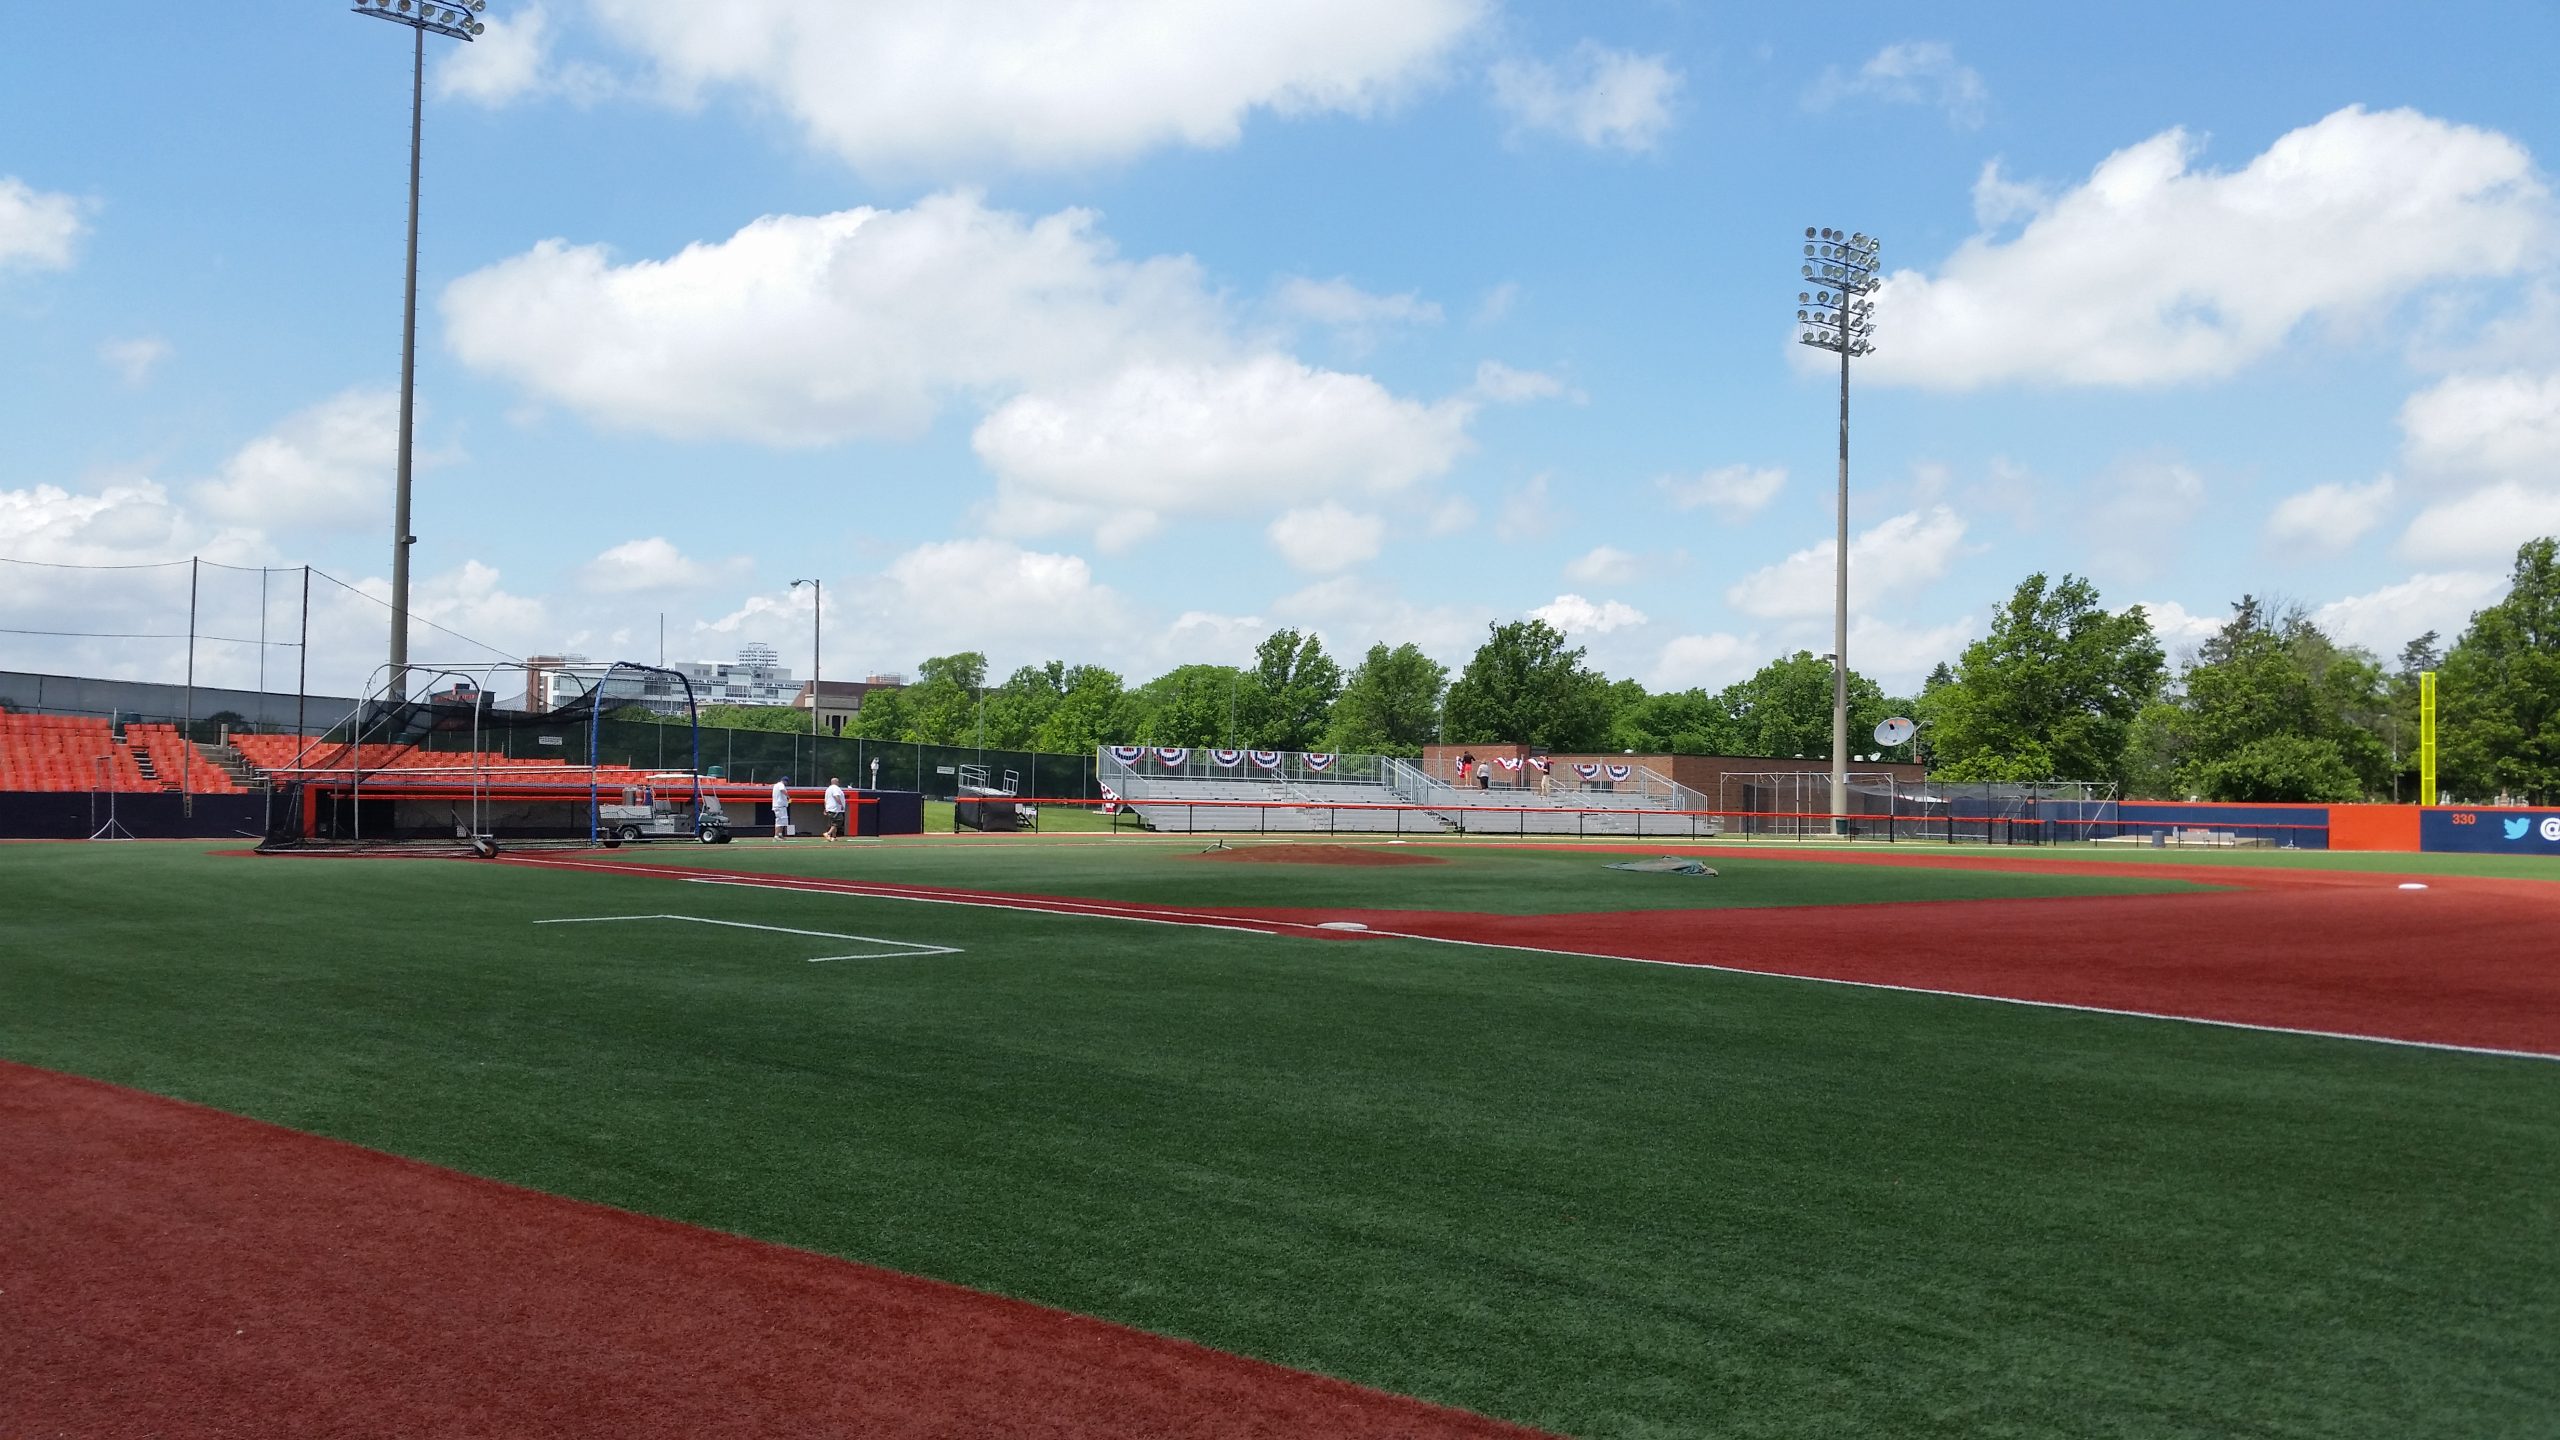 Field view of Bleachers at University of Illinois NCAA baseball regionals 2015